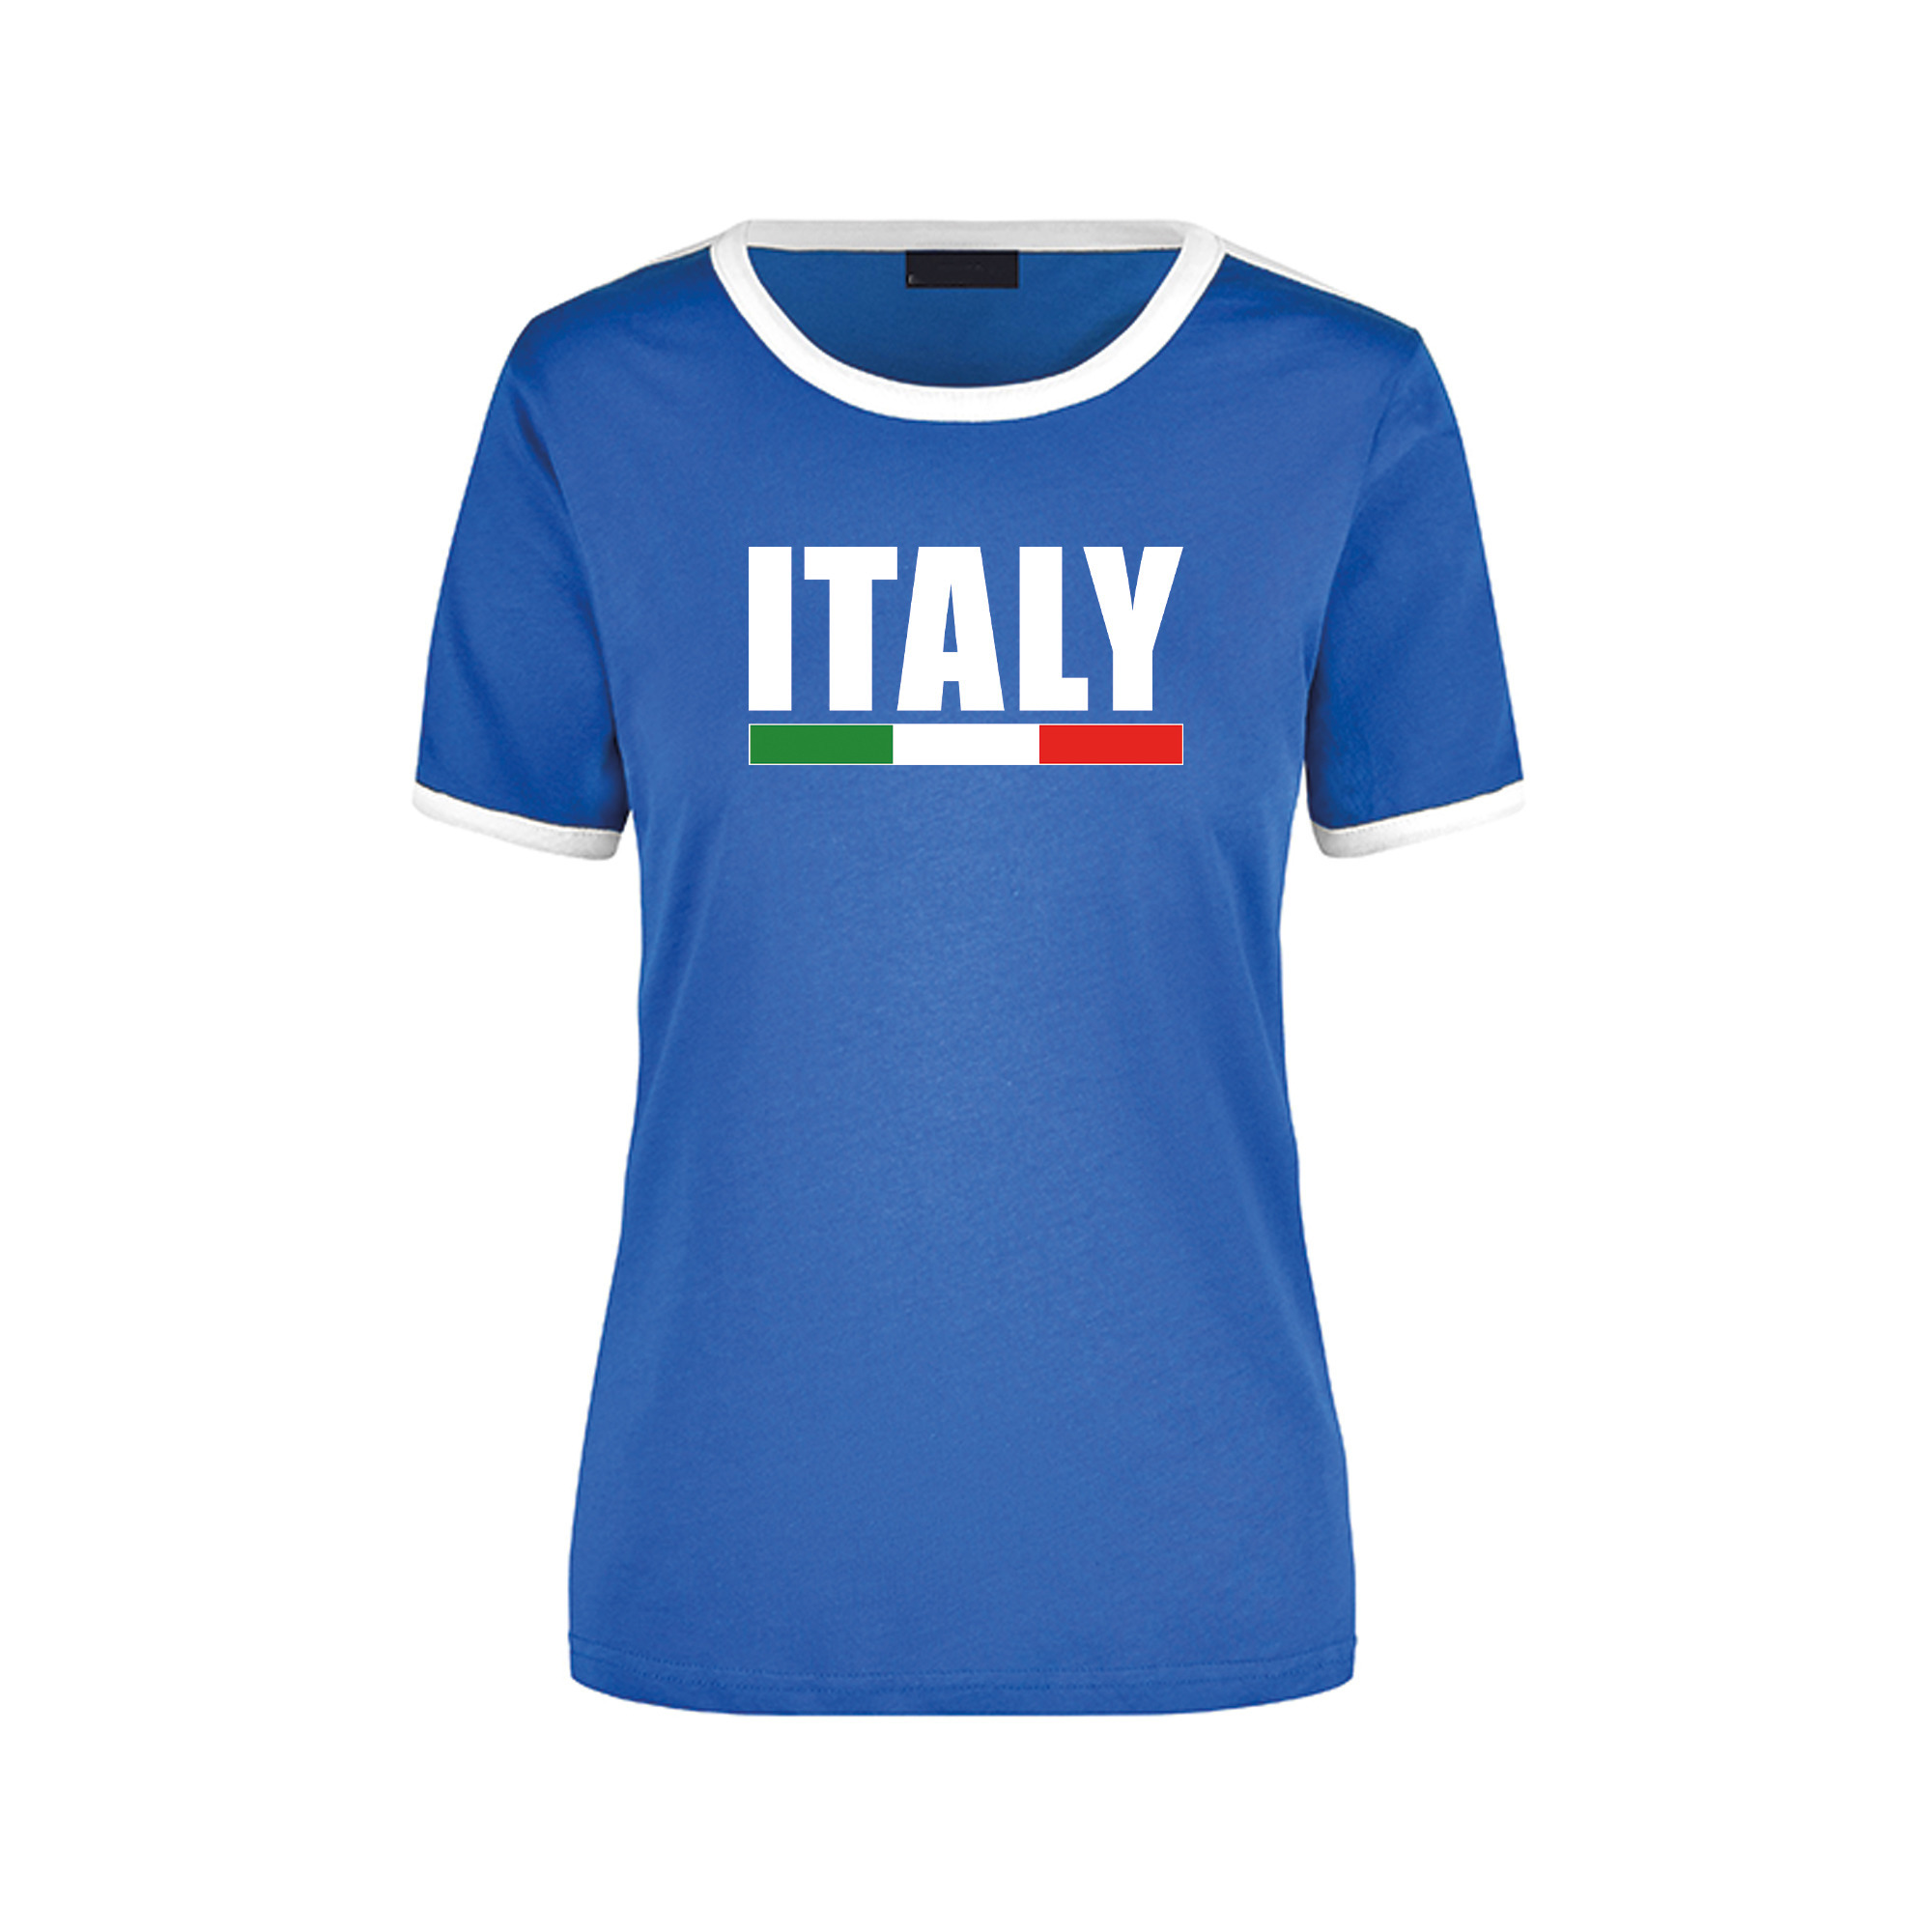 Italy supporter ringer t-shirt blauw met wite randjes voor dames Italie supporter kleding